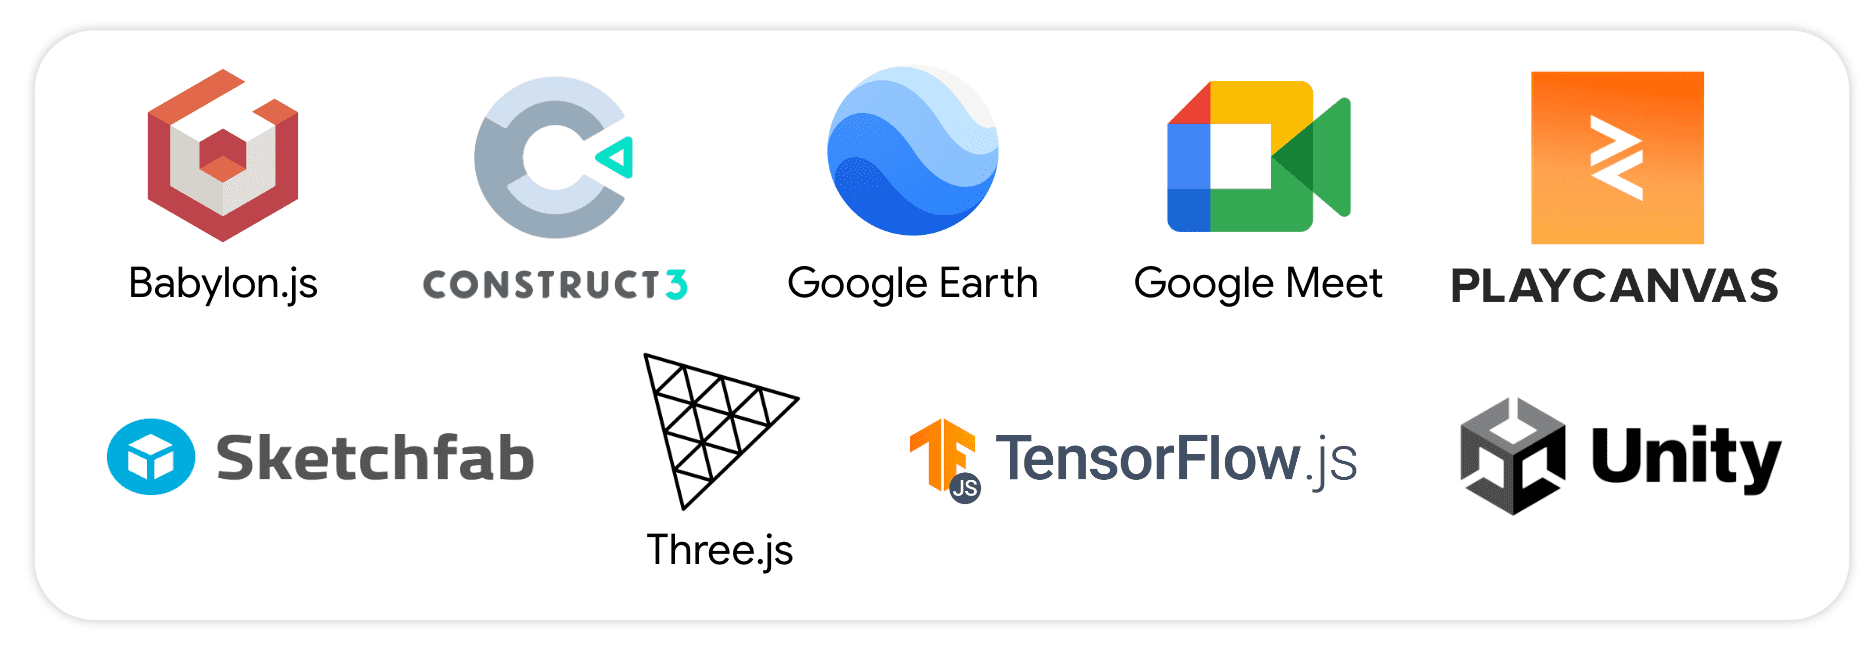 Babylon.js, Construct 3, Google Earth, Google Meet, PlayCanvas, Sketchfab, Three.JS, TensorFlow.js y Unity.